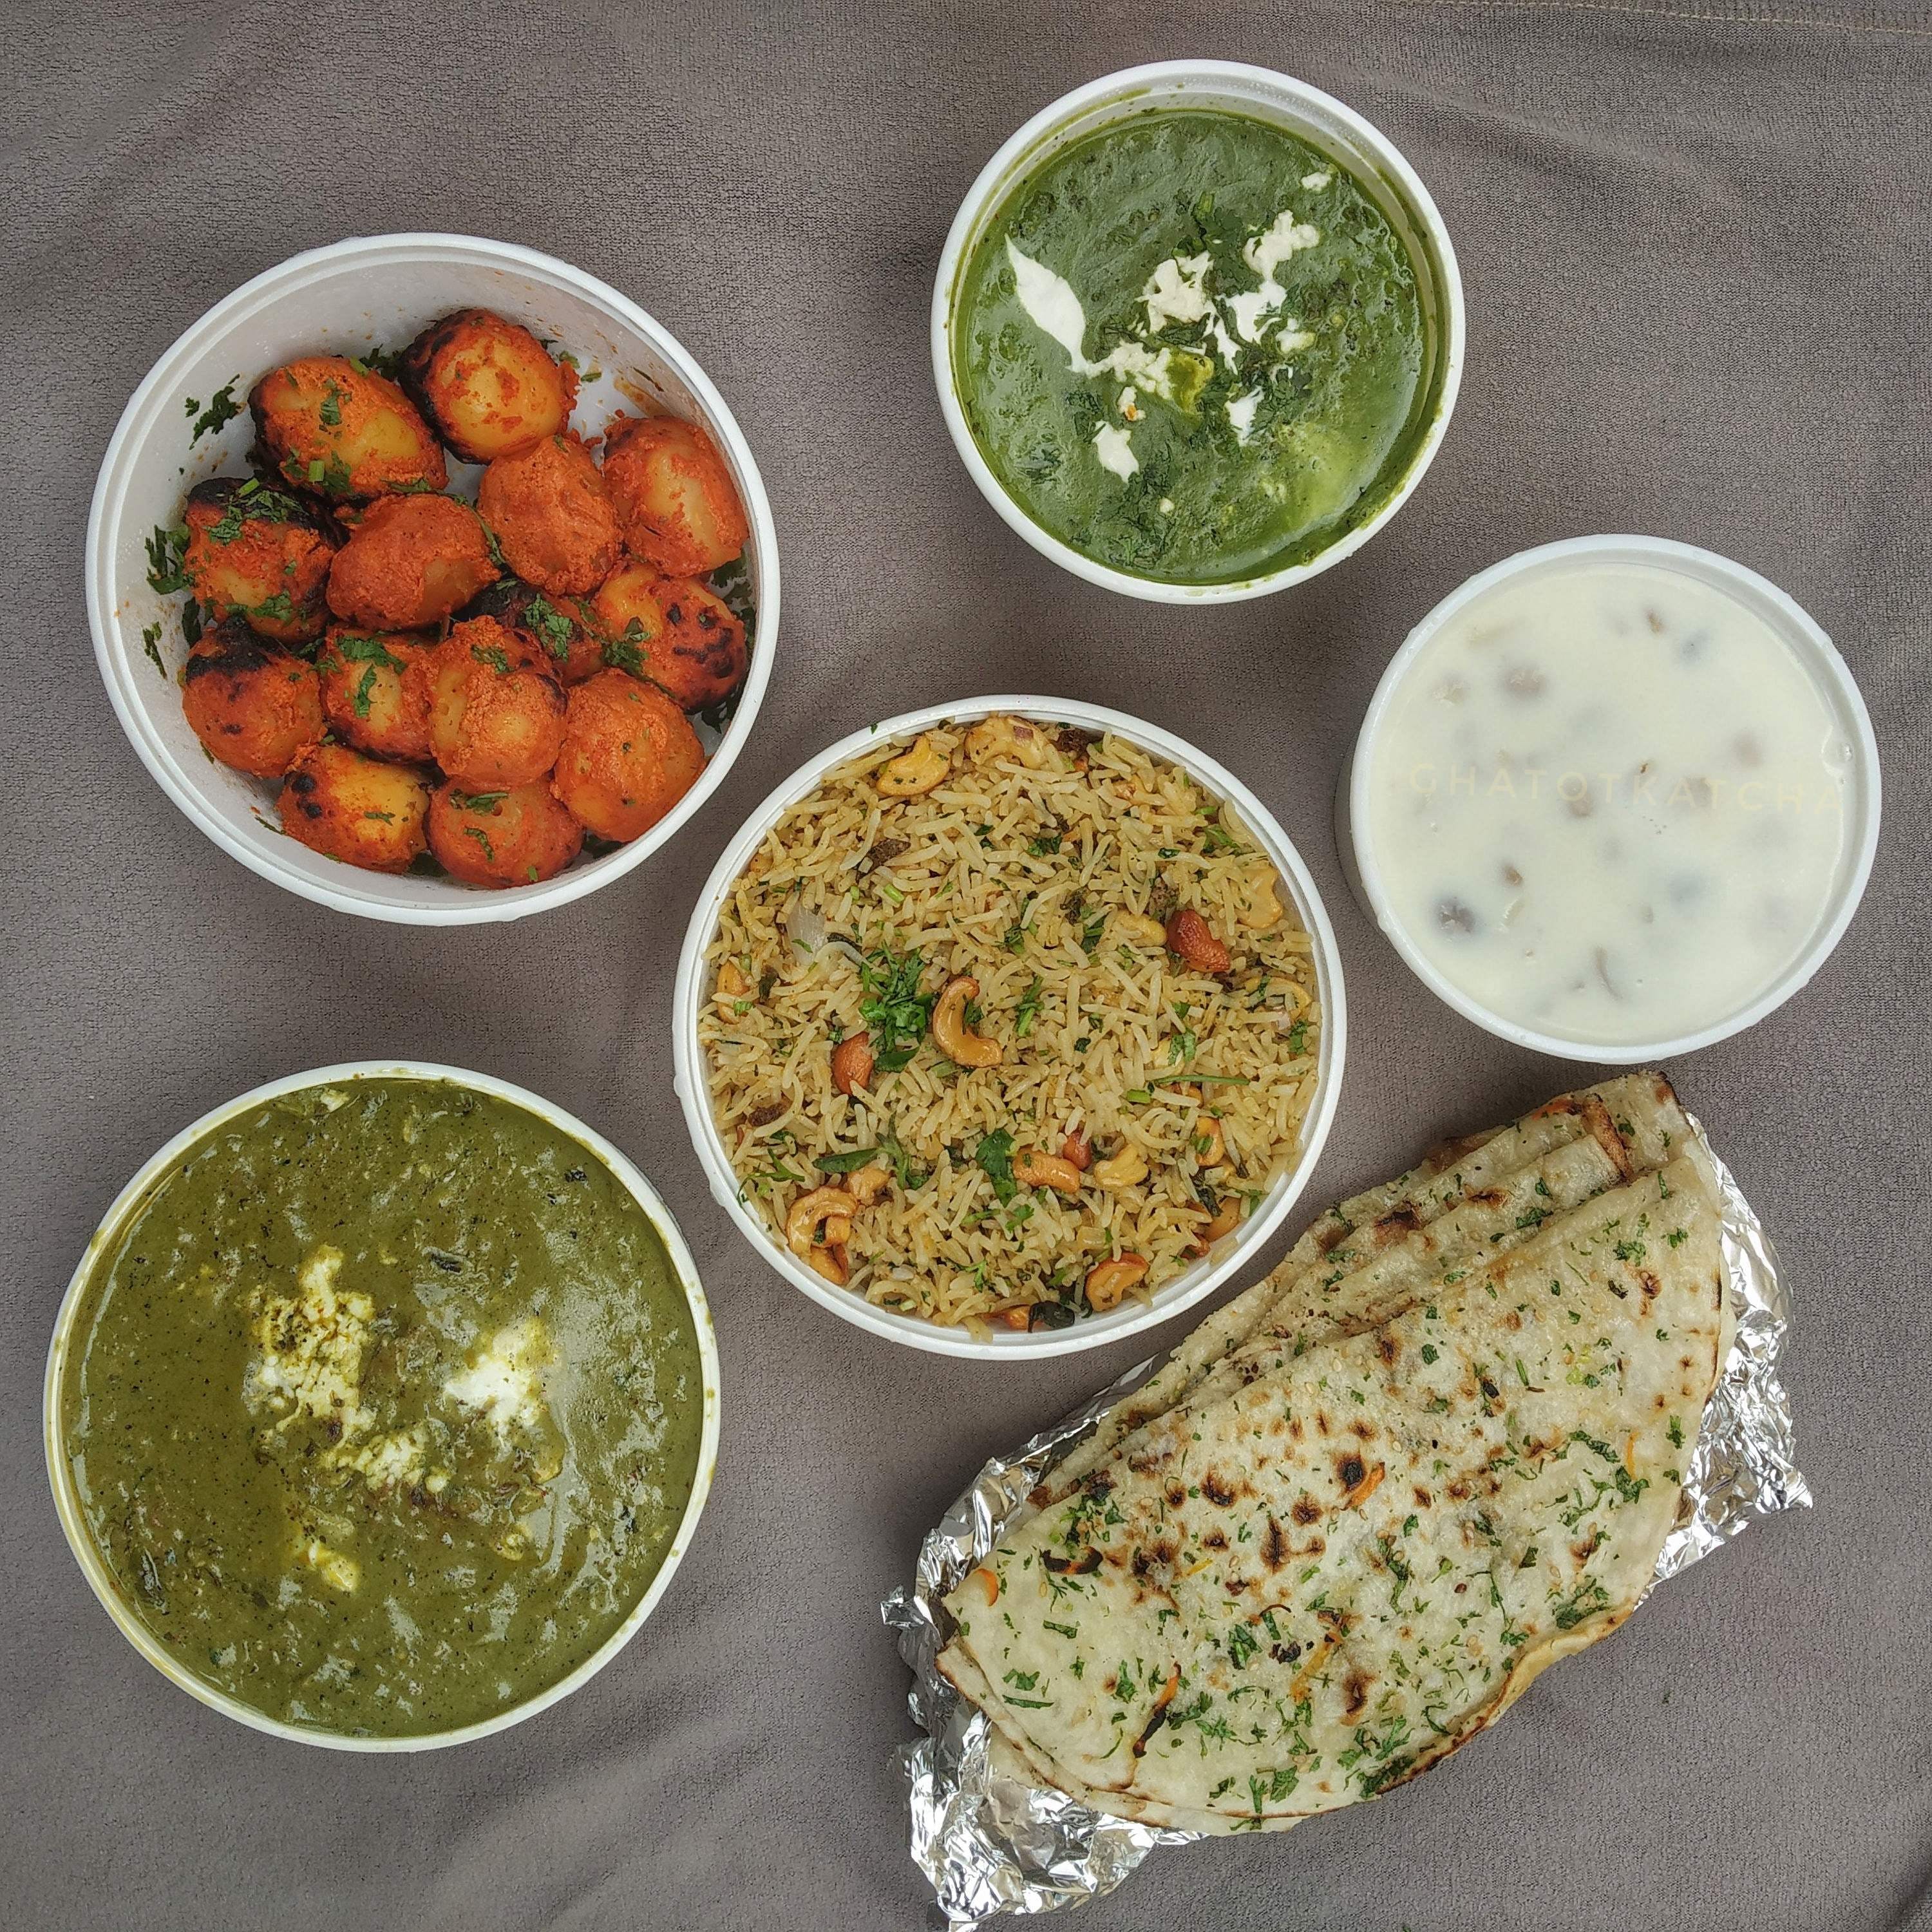 Cuisine,Food,Dish,Ingredient,Vegetarian food,Lunch,Meal,Indian cuisine,Flatbread,Sindhi cuisine